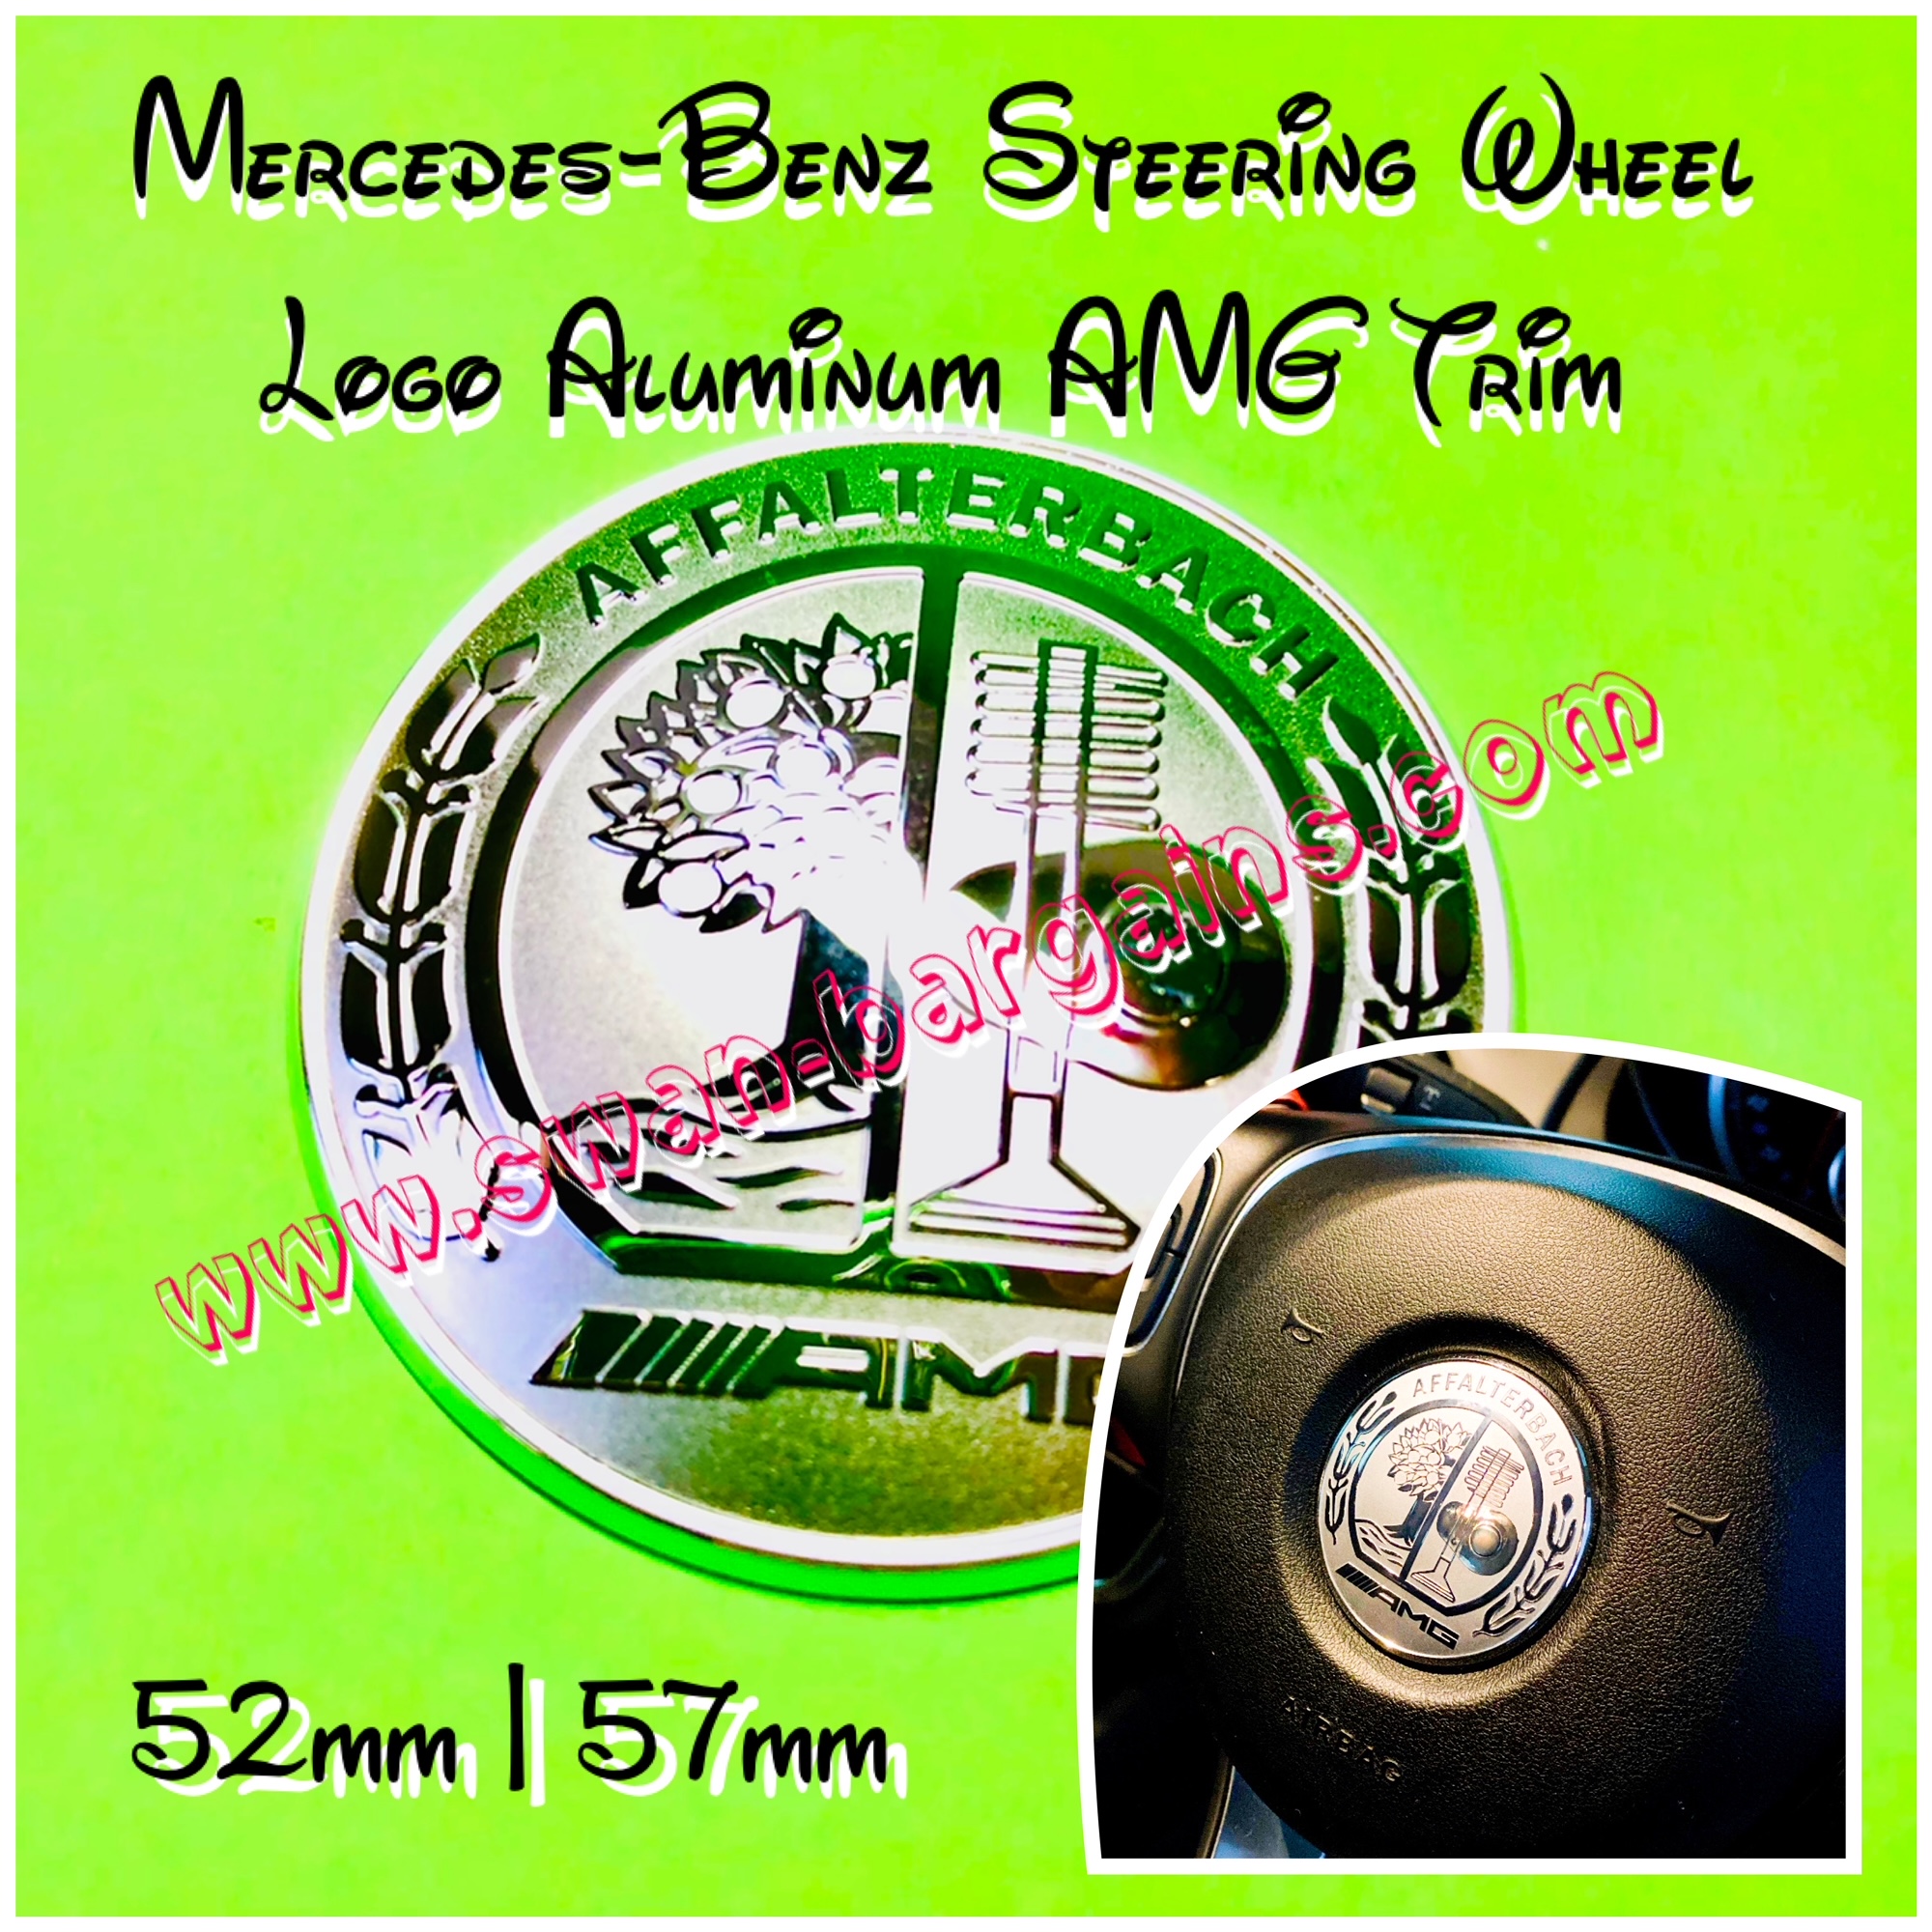 Mercedes Benz Steering Wheel Star Overlay Trim Singapore - Aluminium AMG Silver